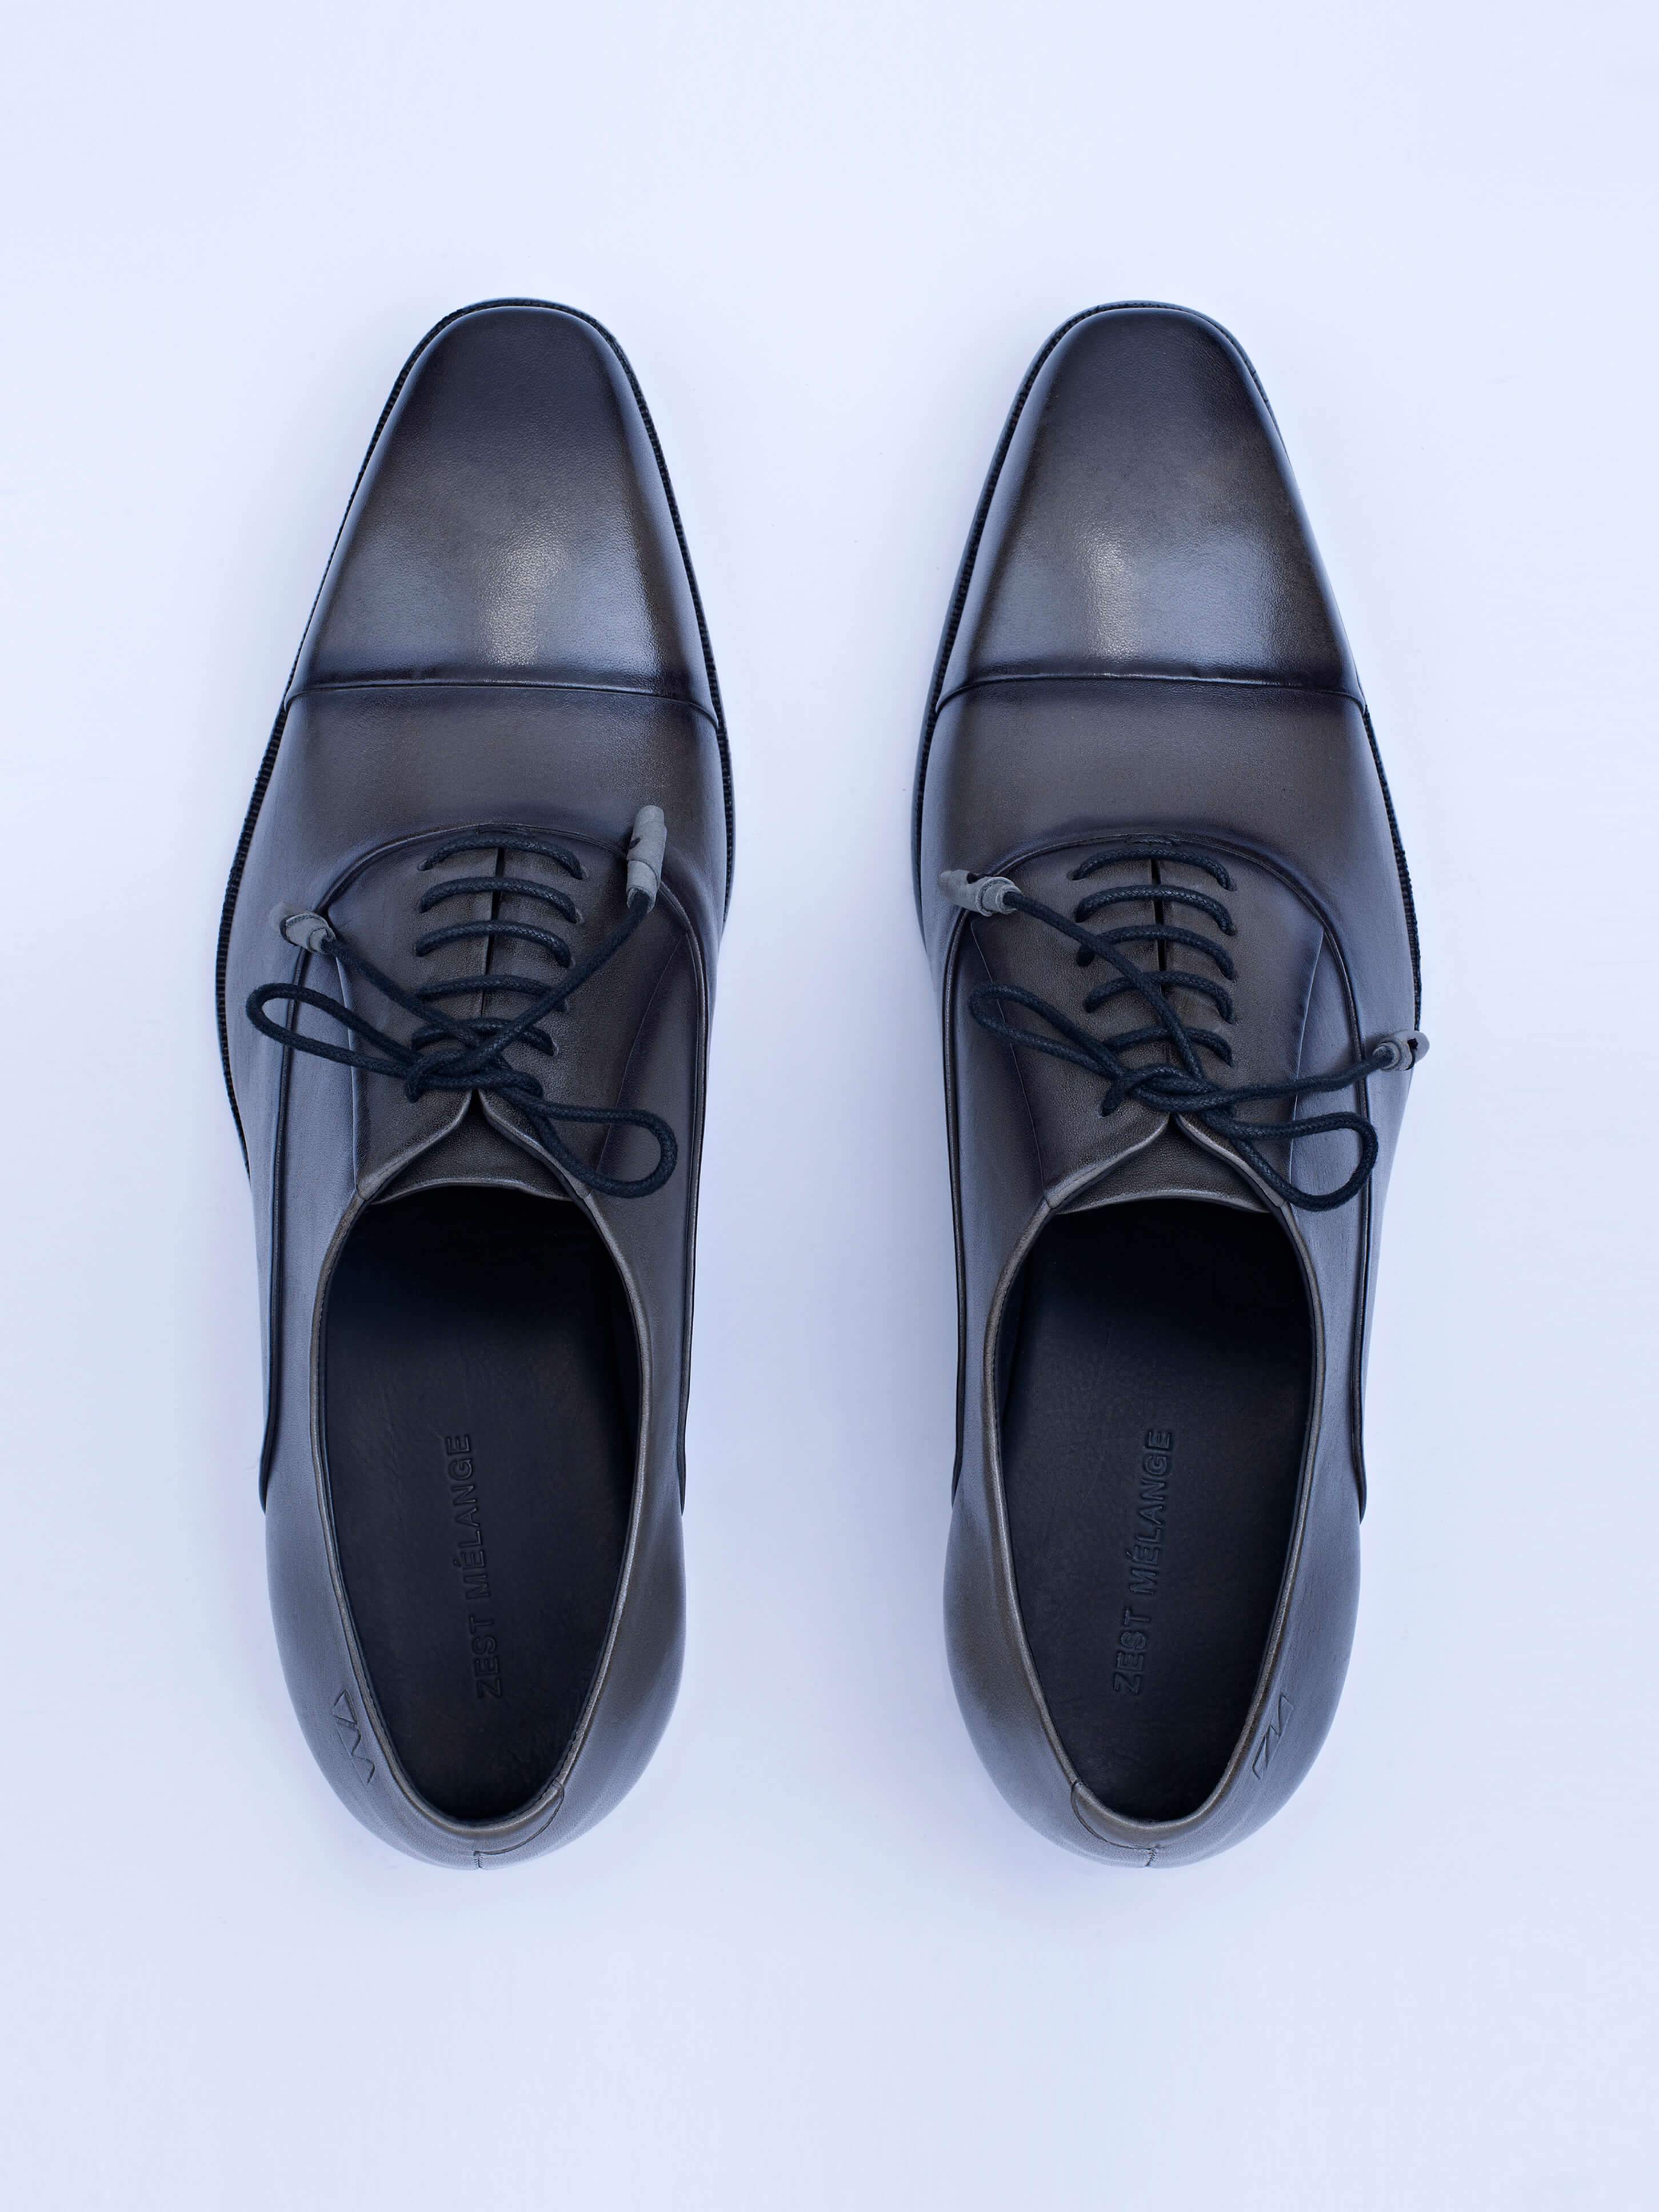 Oxford Lace Up Shoes With Precise Invisible Stitch Details - Zest Mélange 